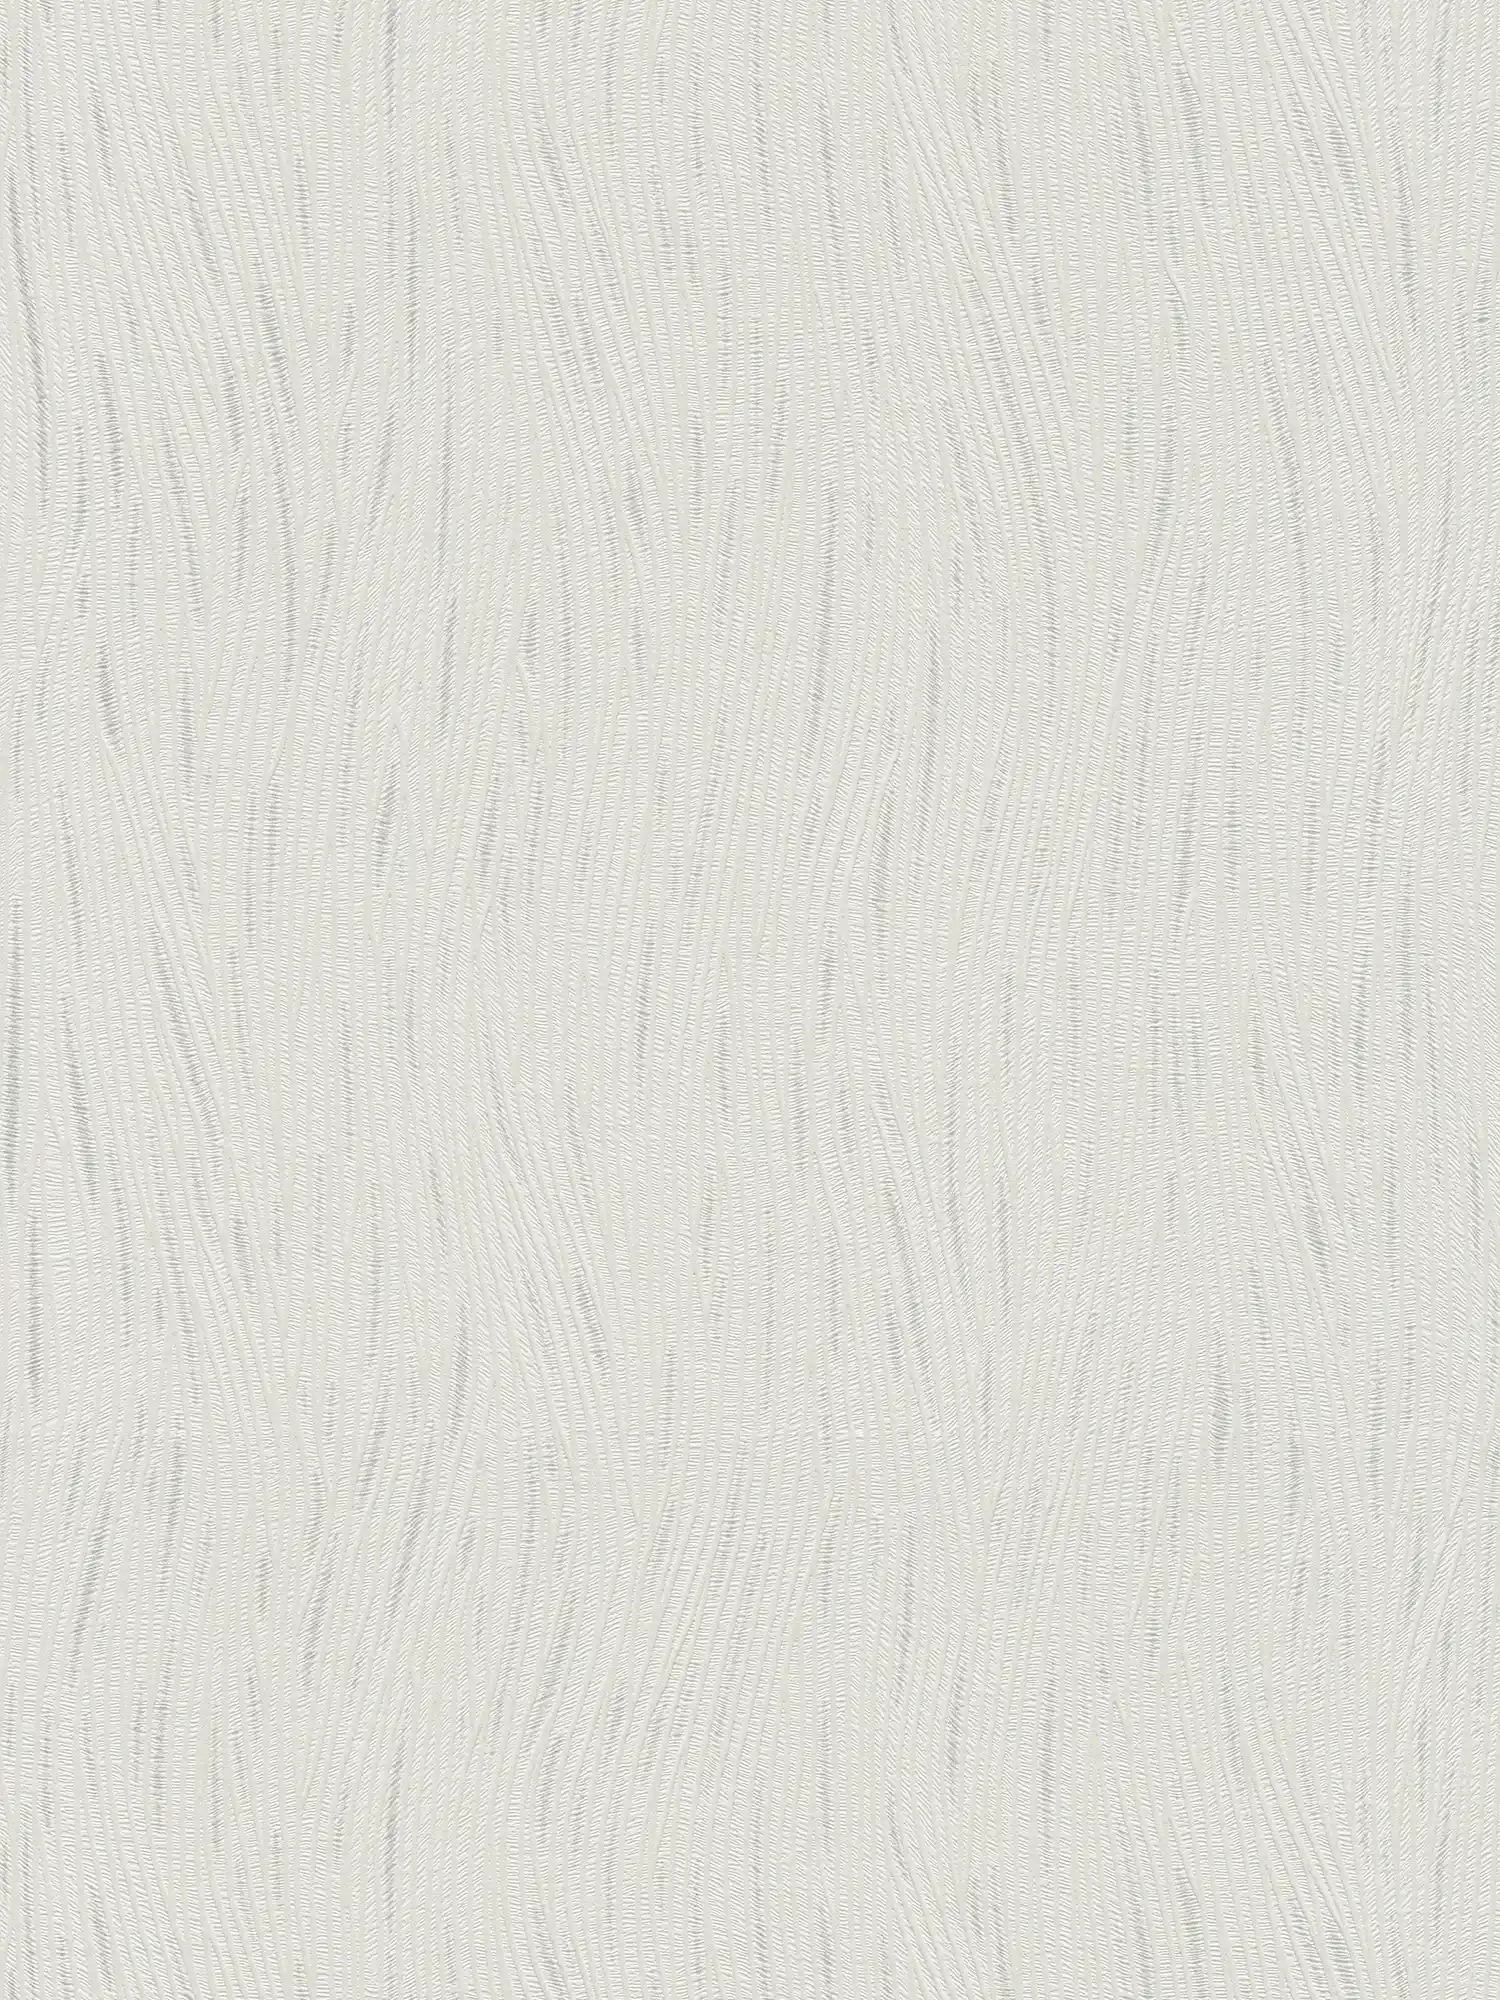 Papel pintado gráfico con motivos ondulados y acentos metálicos - blanco, plata
